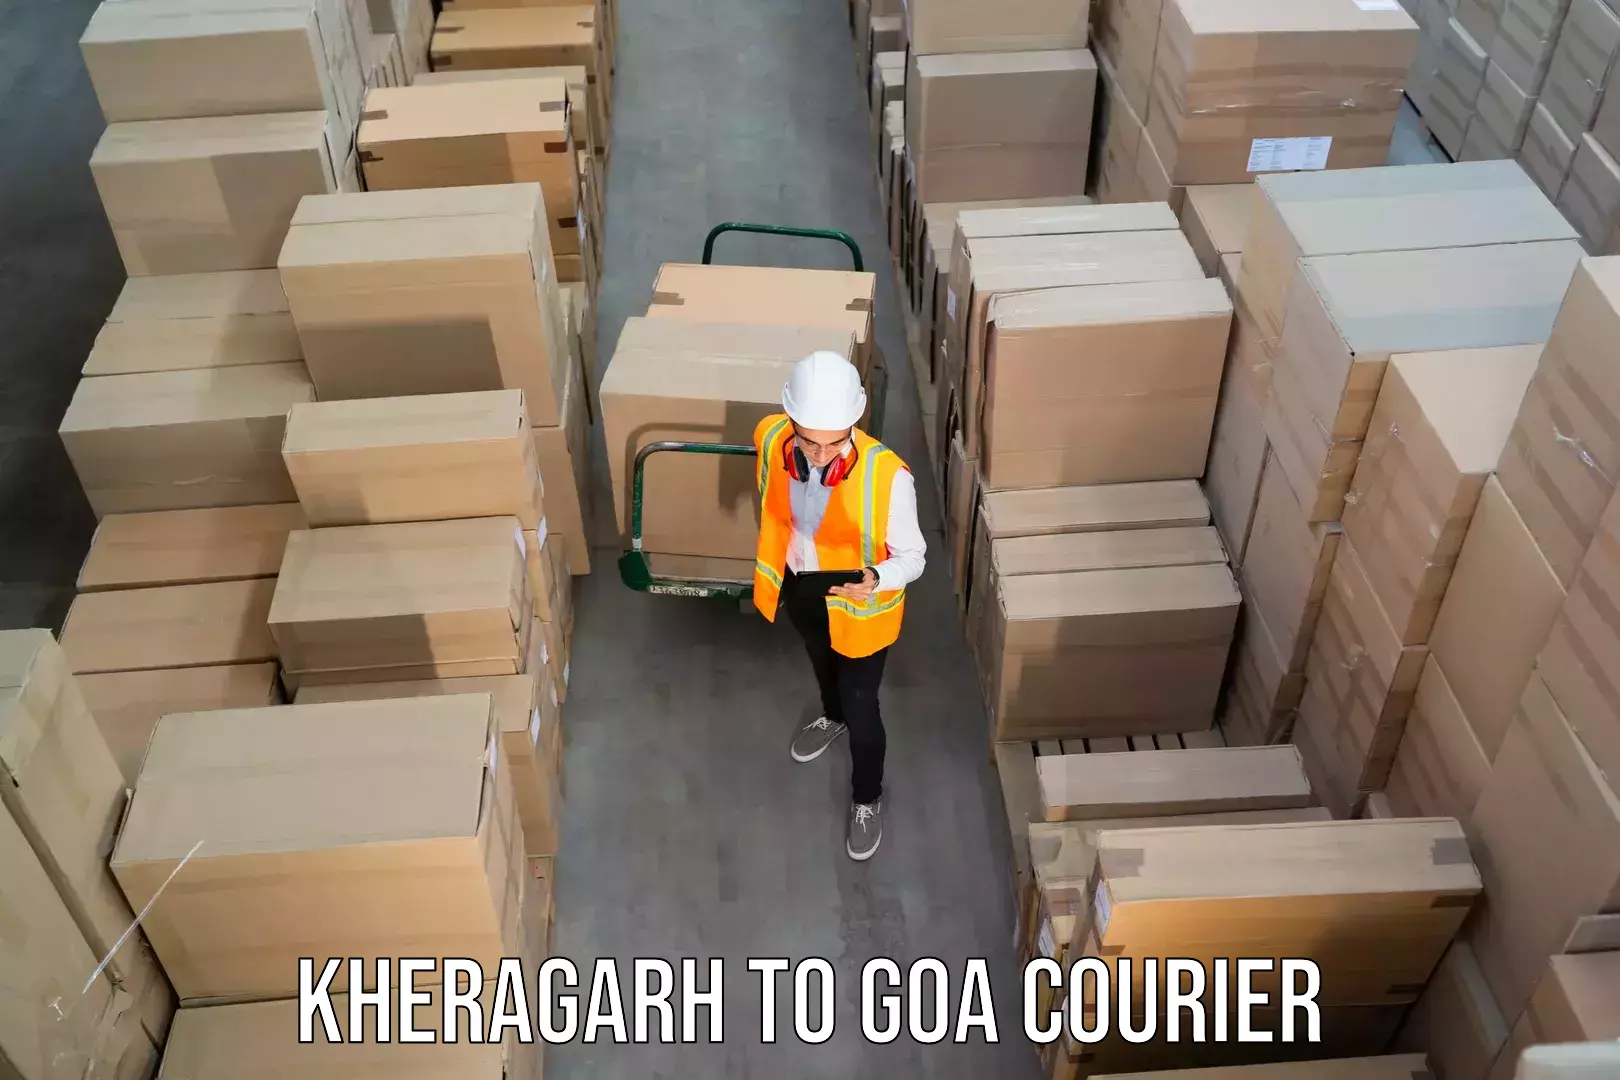 Courier service comparison Kheragarh to Mormugao Port